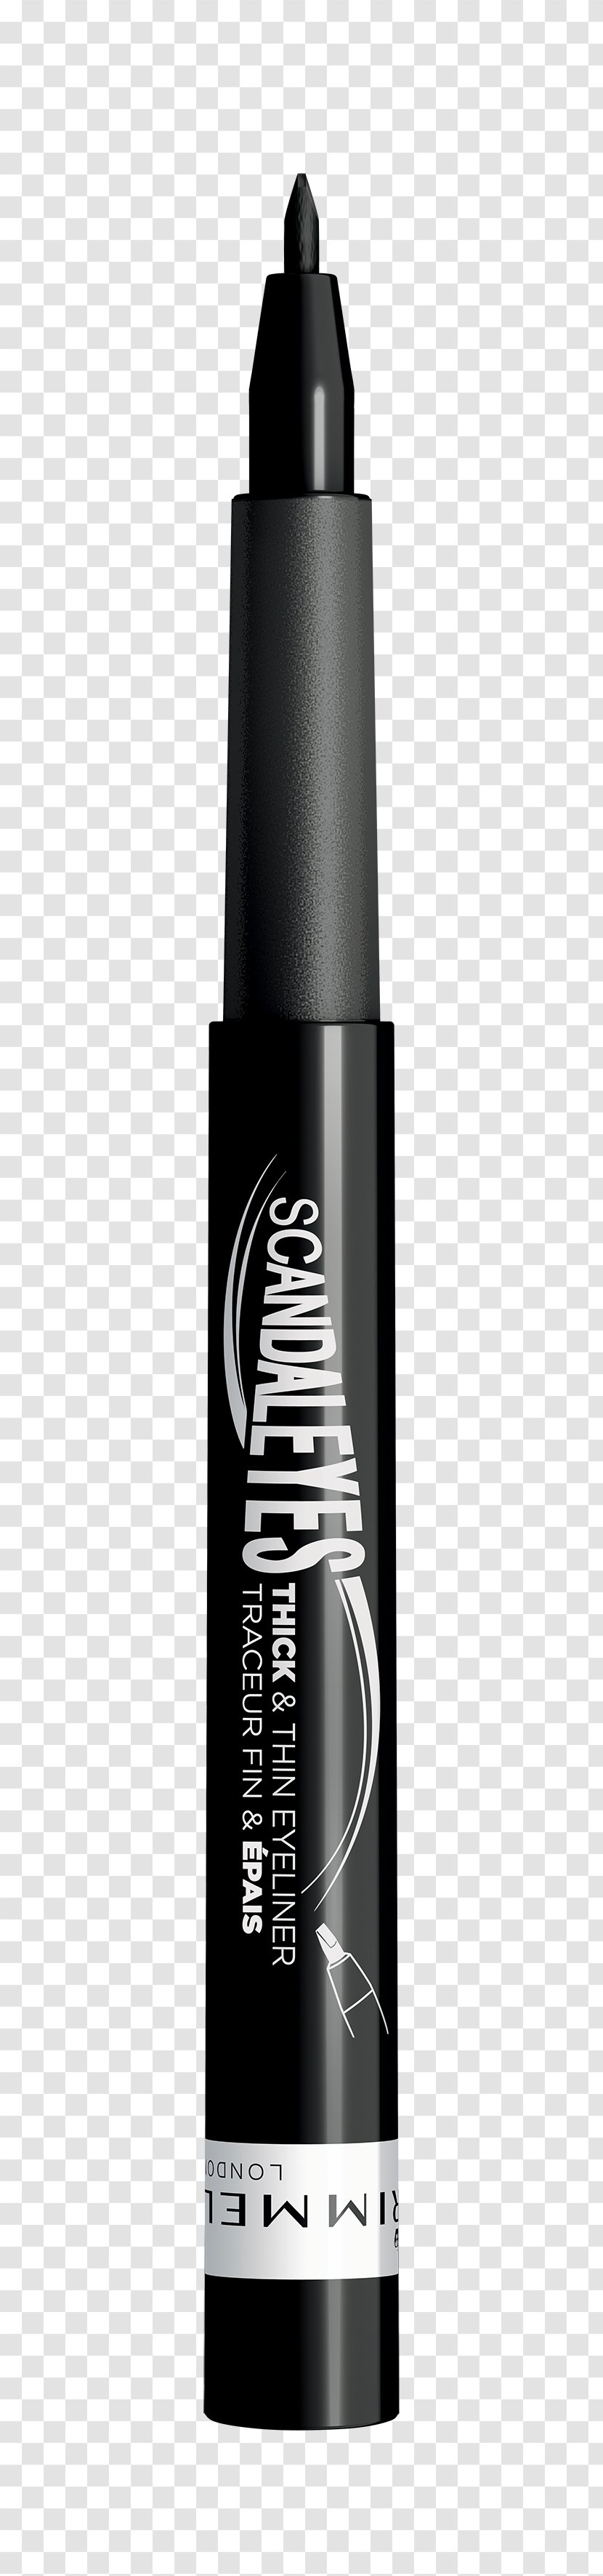 Cosmetics Rimmel Scandaleyes Mascara Eye Liner - Kate Moss Transparent PNG